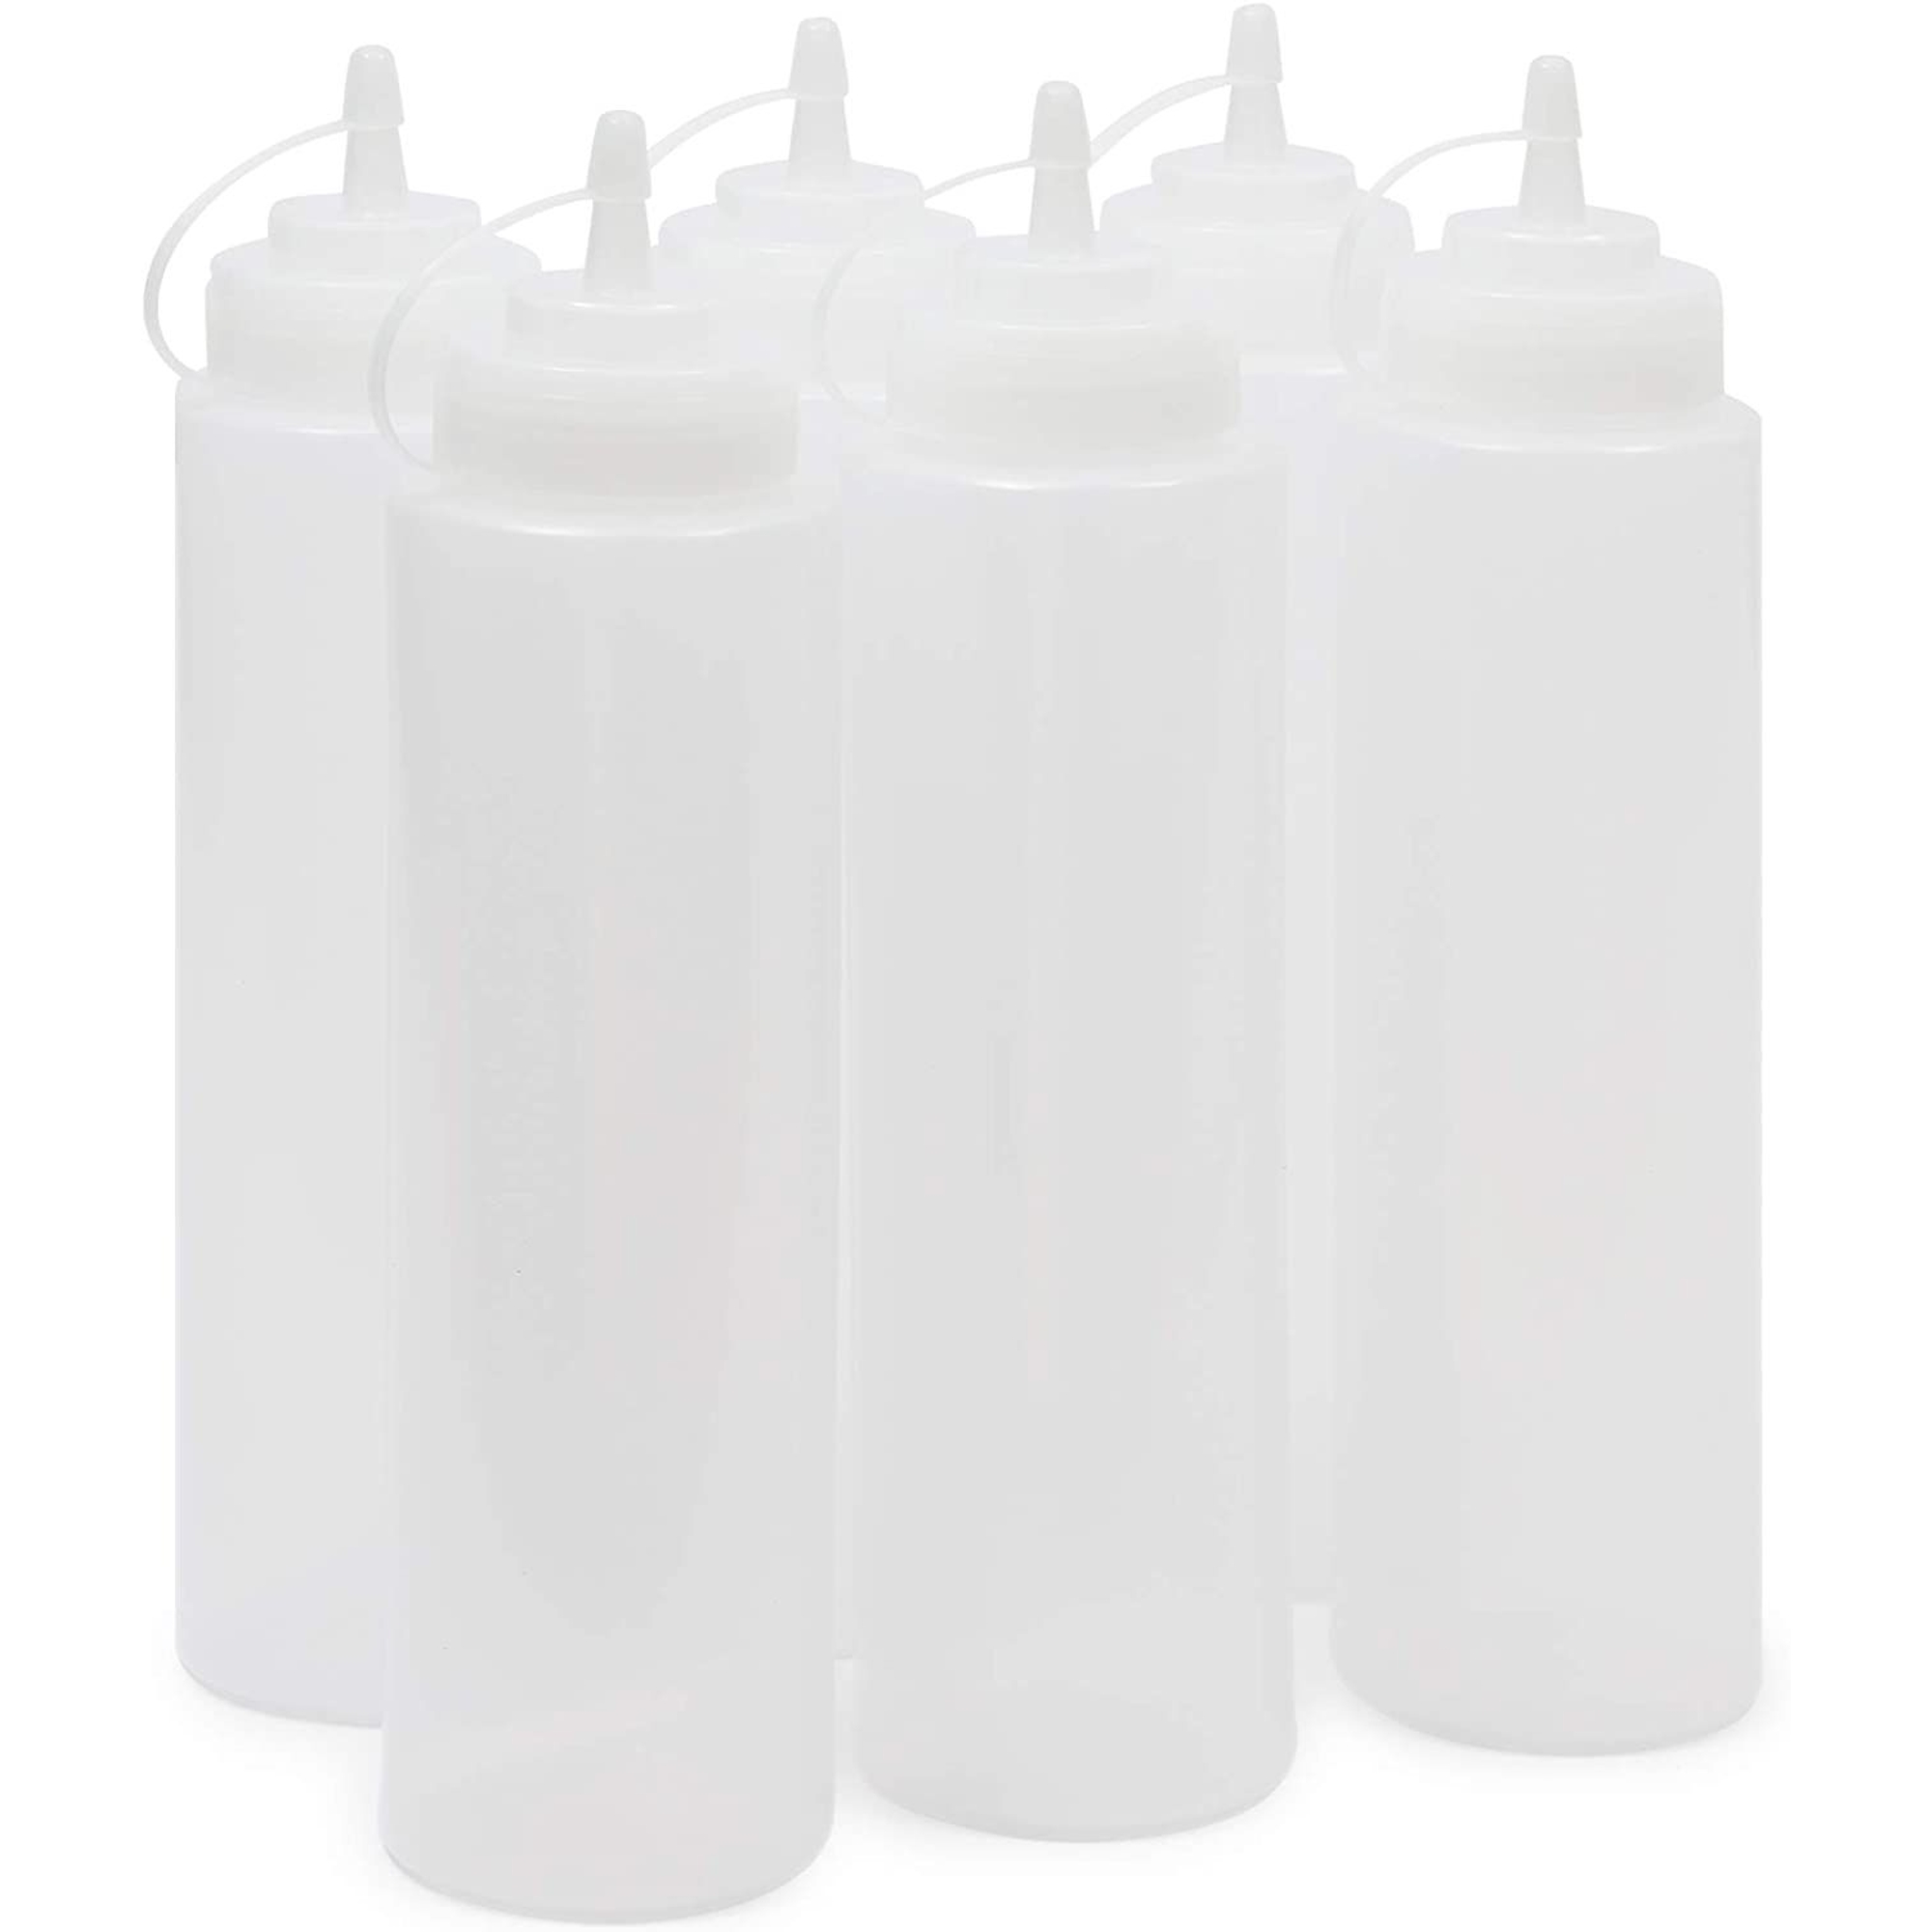 6 Pack 24 oz Plastic Condiment Squeeze Bottles with Caps, Empty